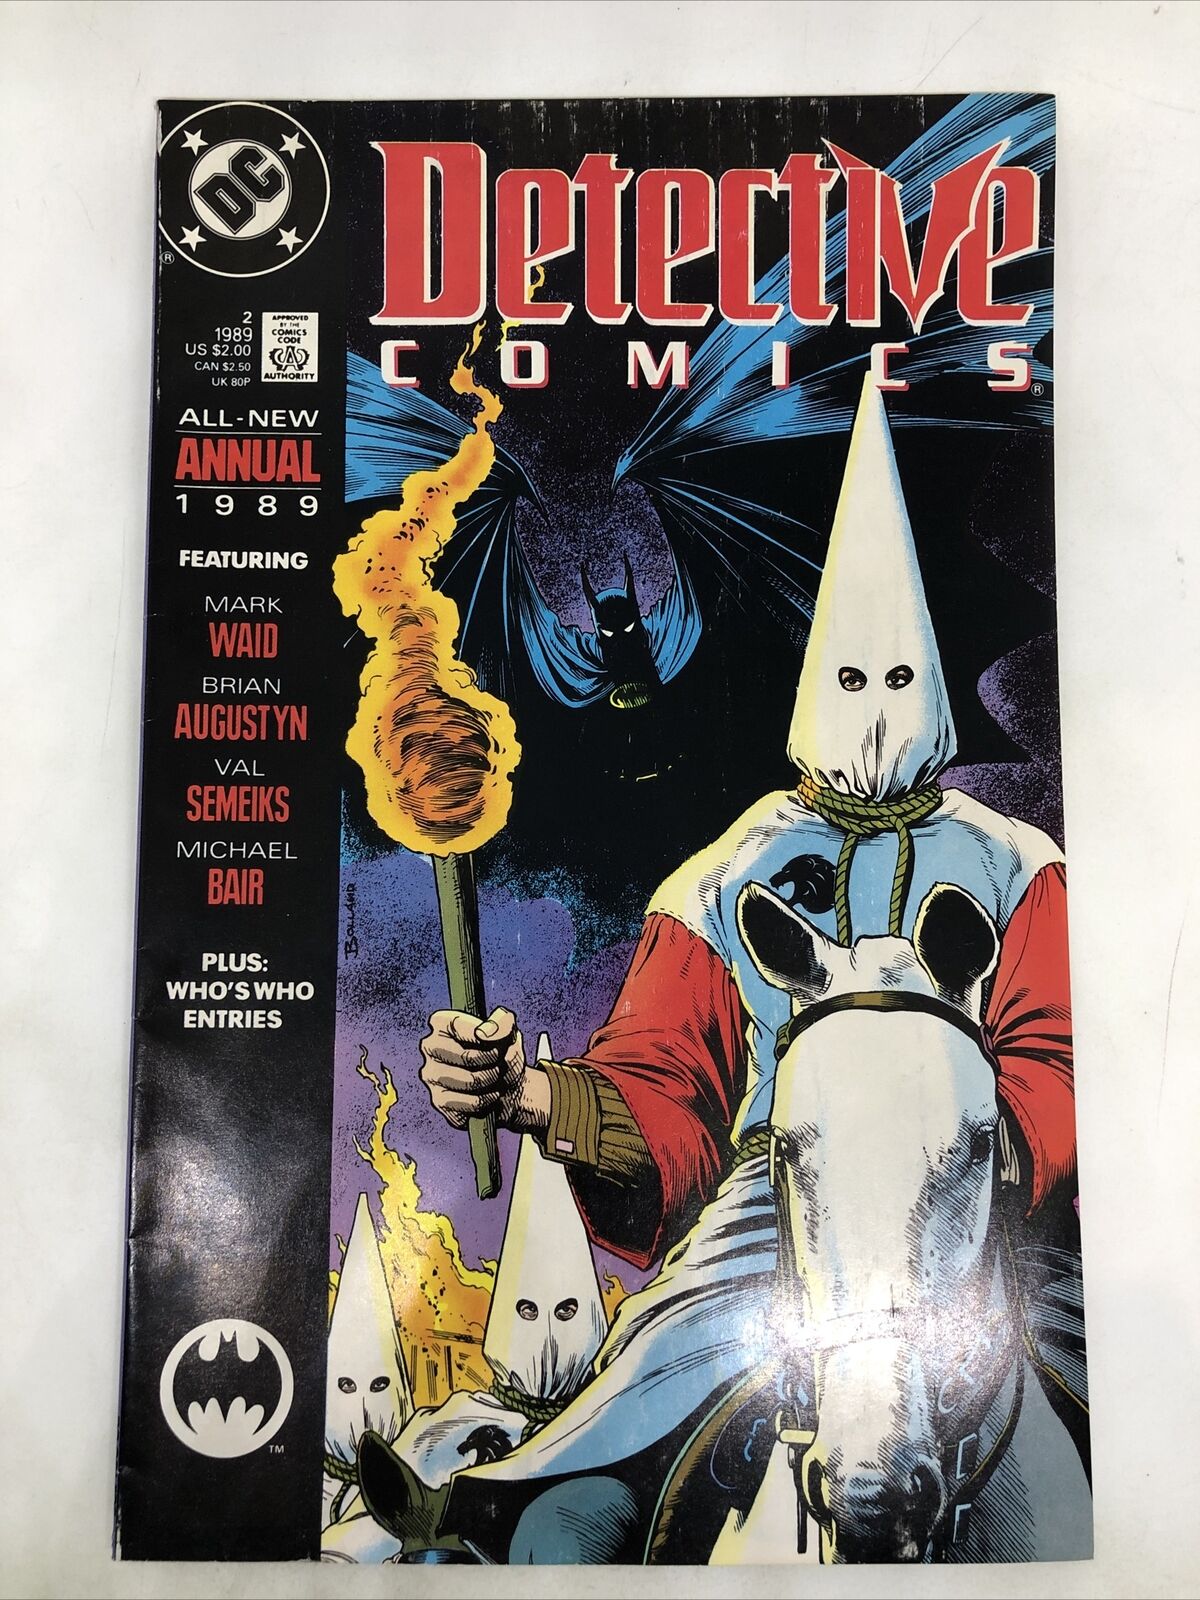 DC Detective Comics Annual 2 1989